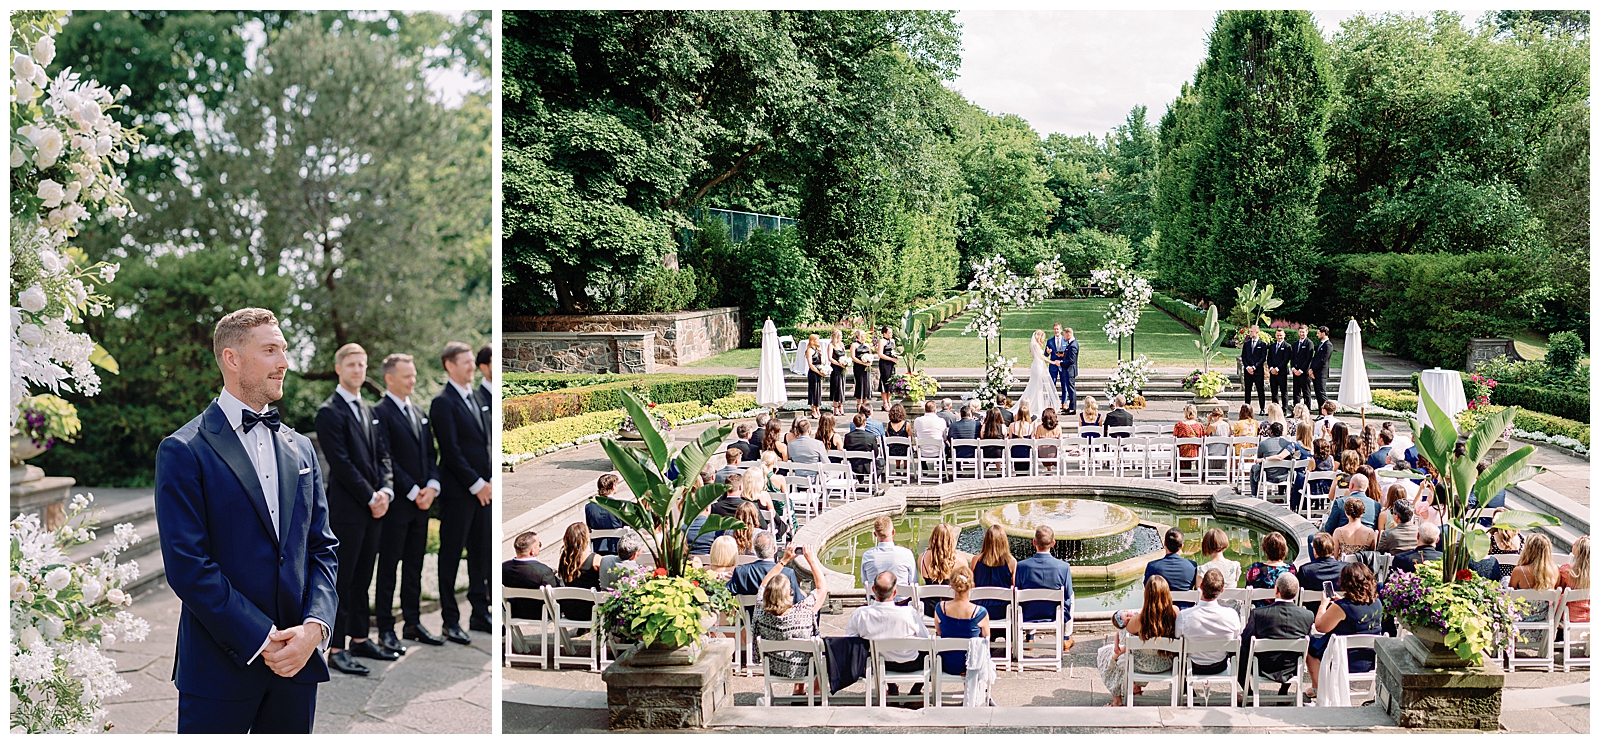 Stunning Ceremony at Graydon Hall Manor around fountain magical elegant 